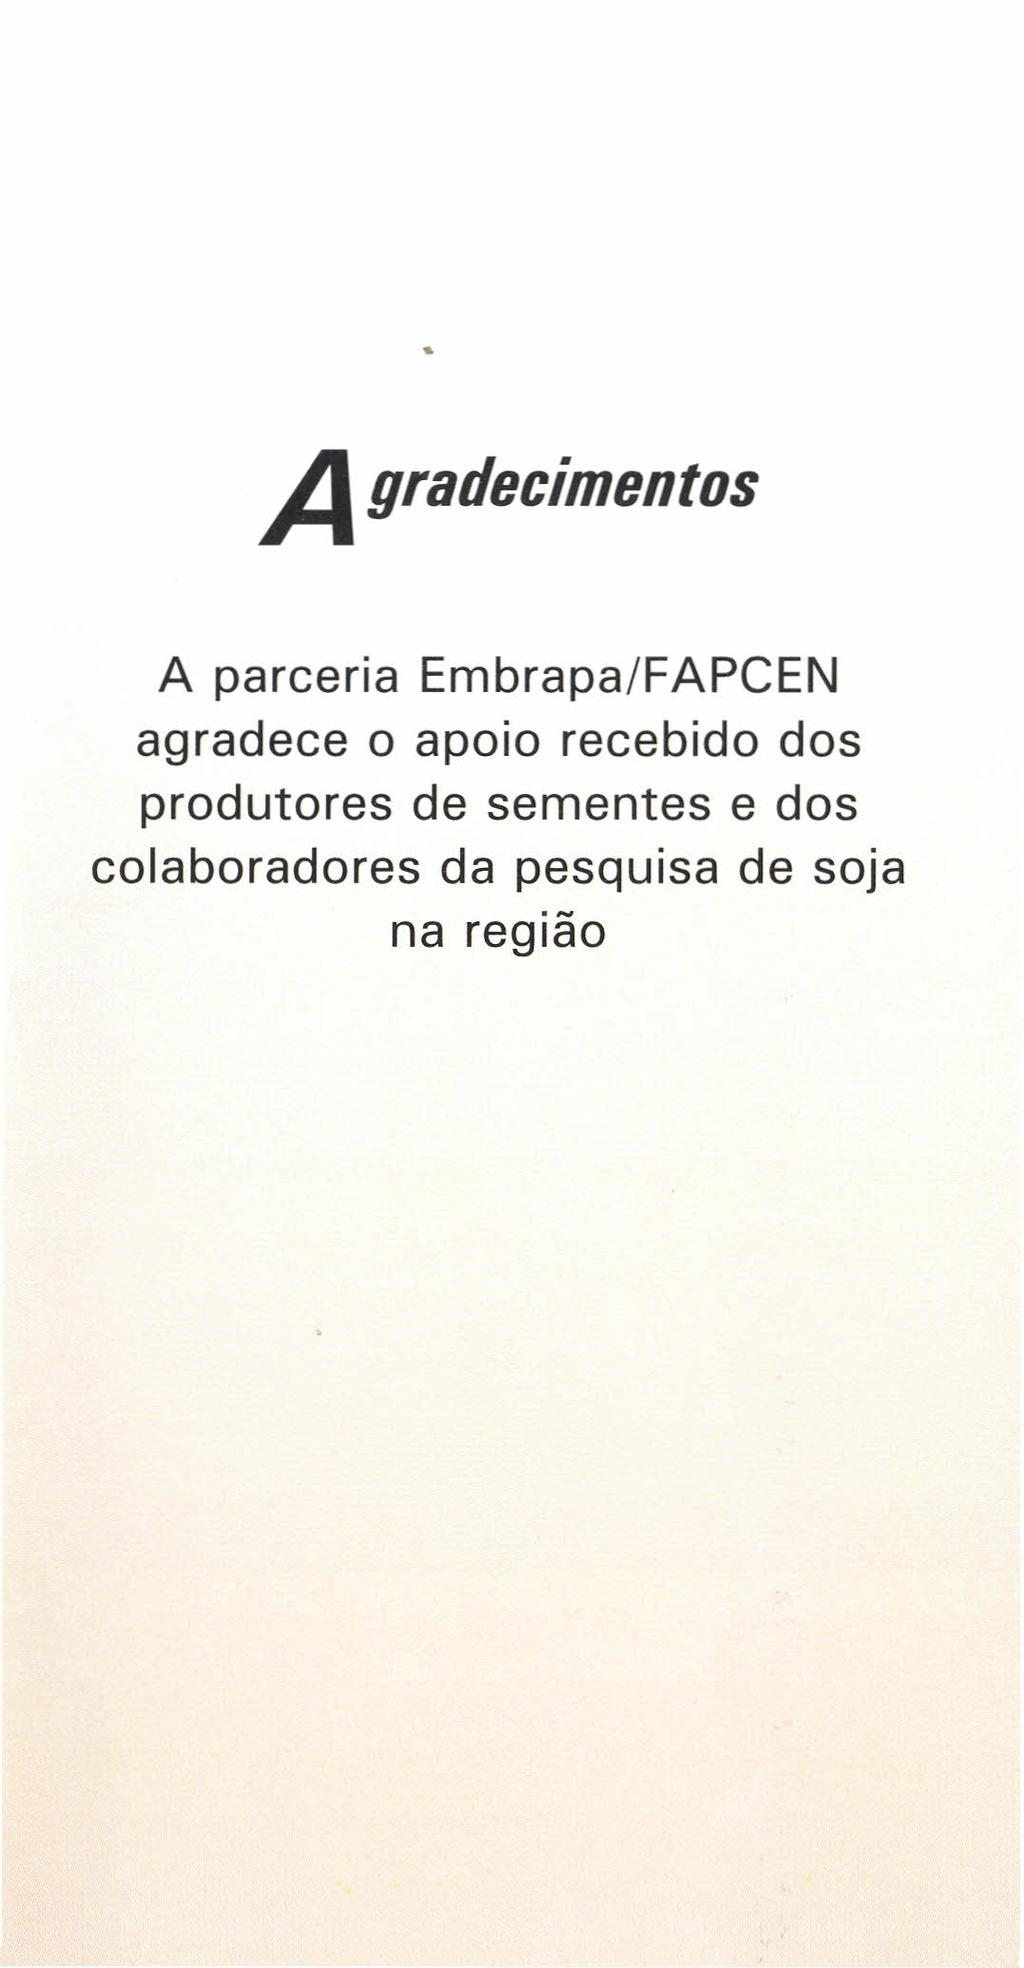 Agradecimentos A parceria Embrapa/FAPCEN agradece o apoio recebido dos